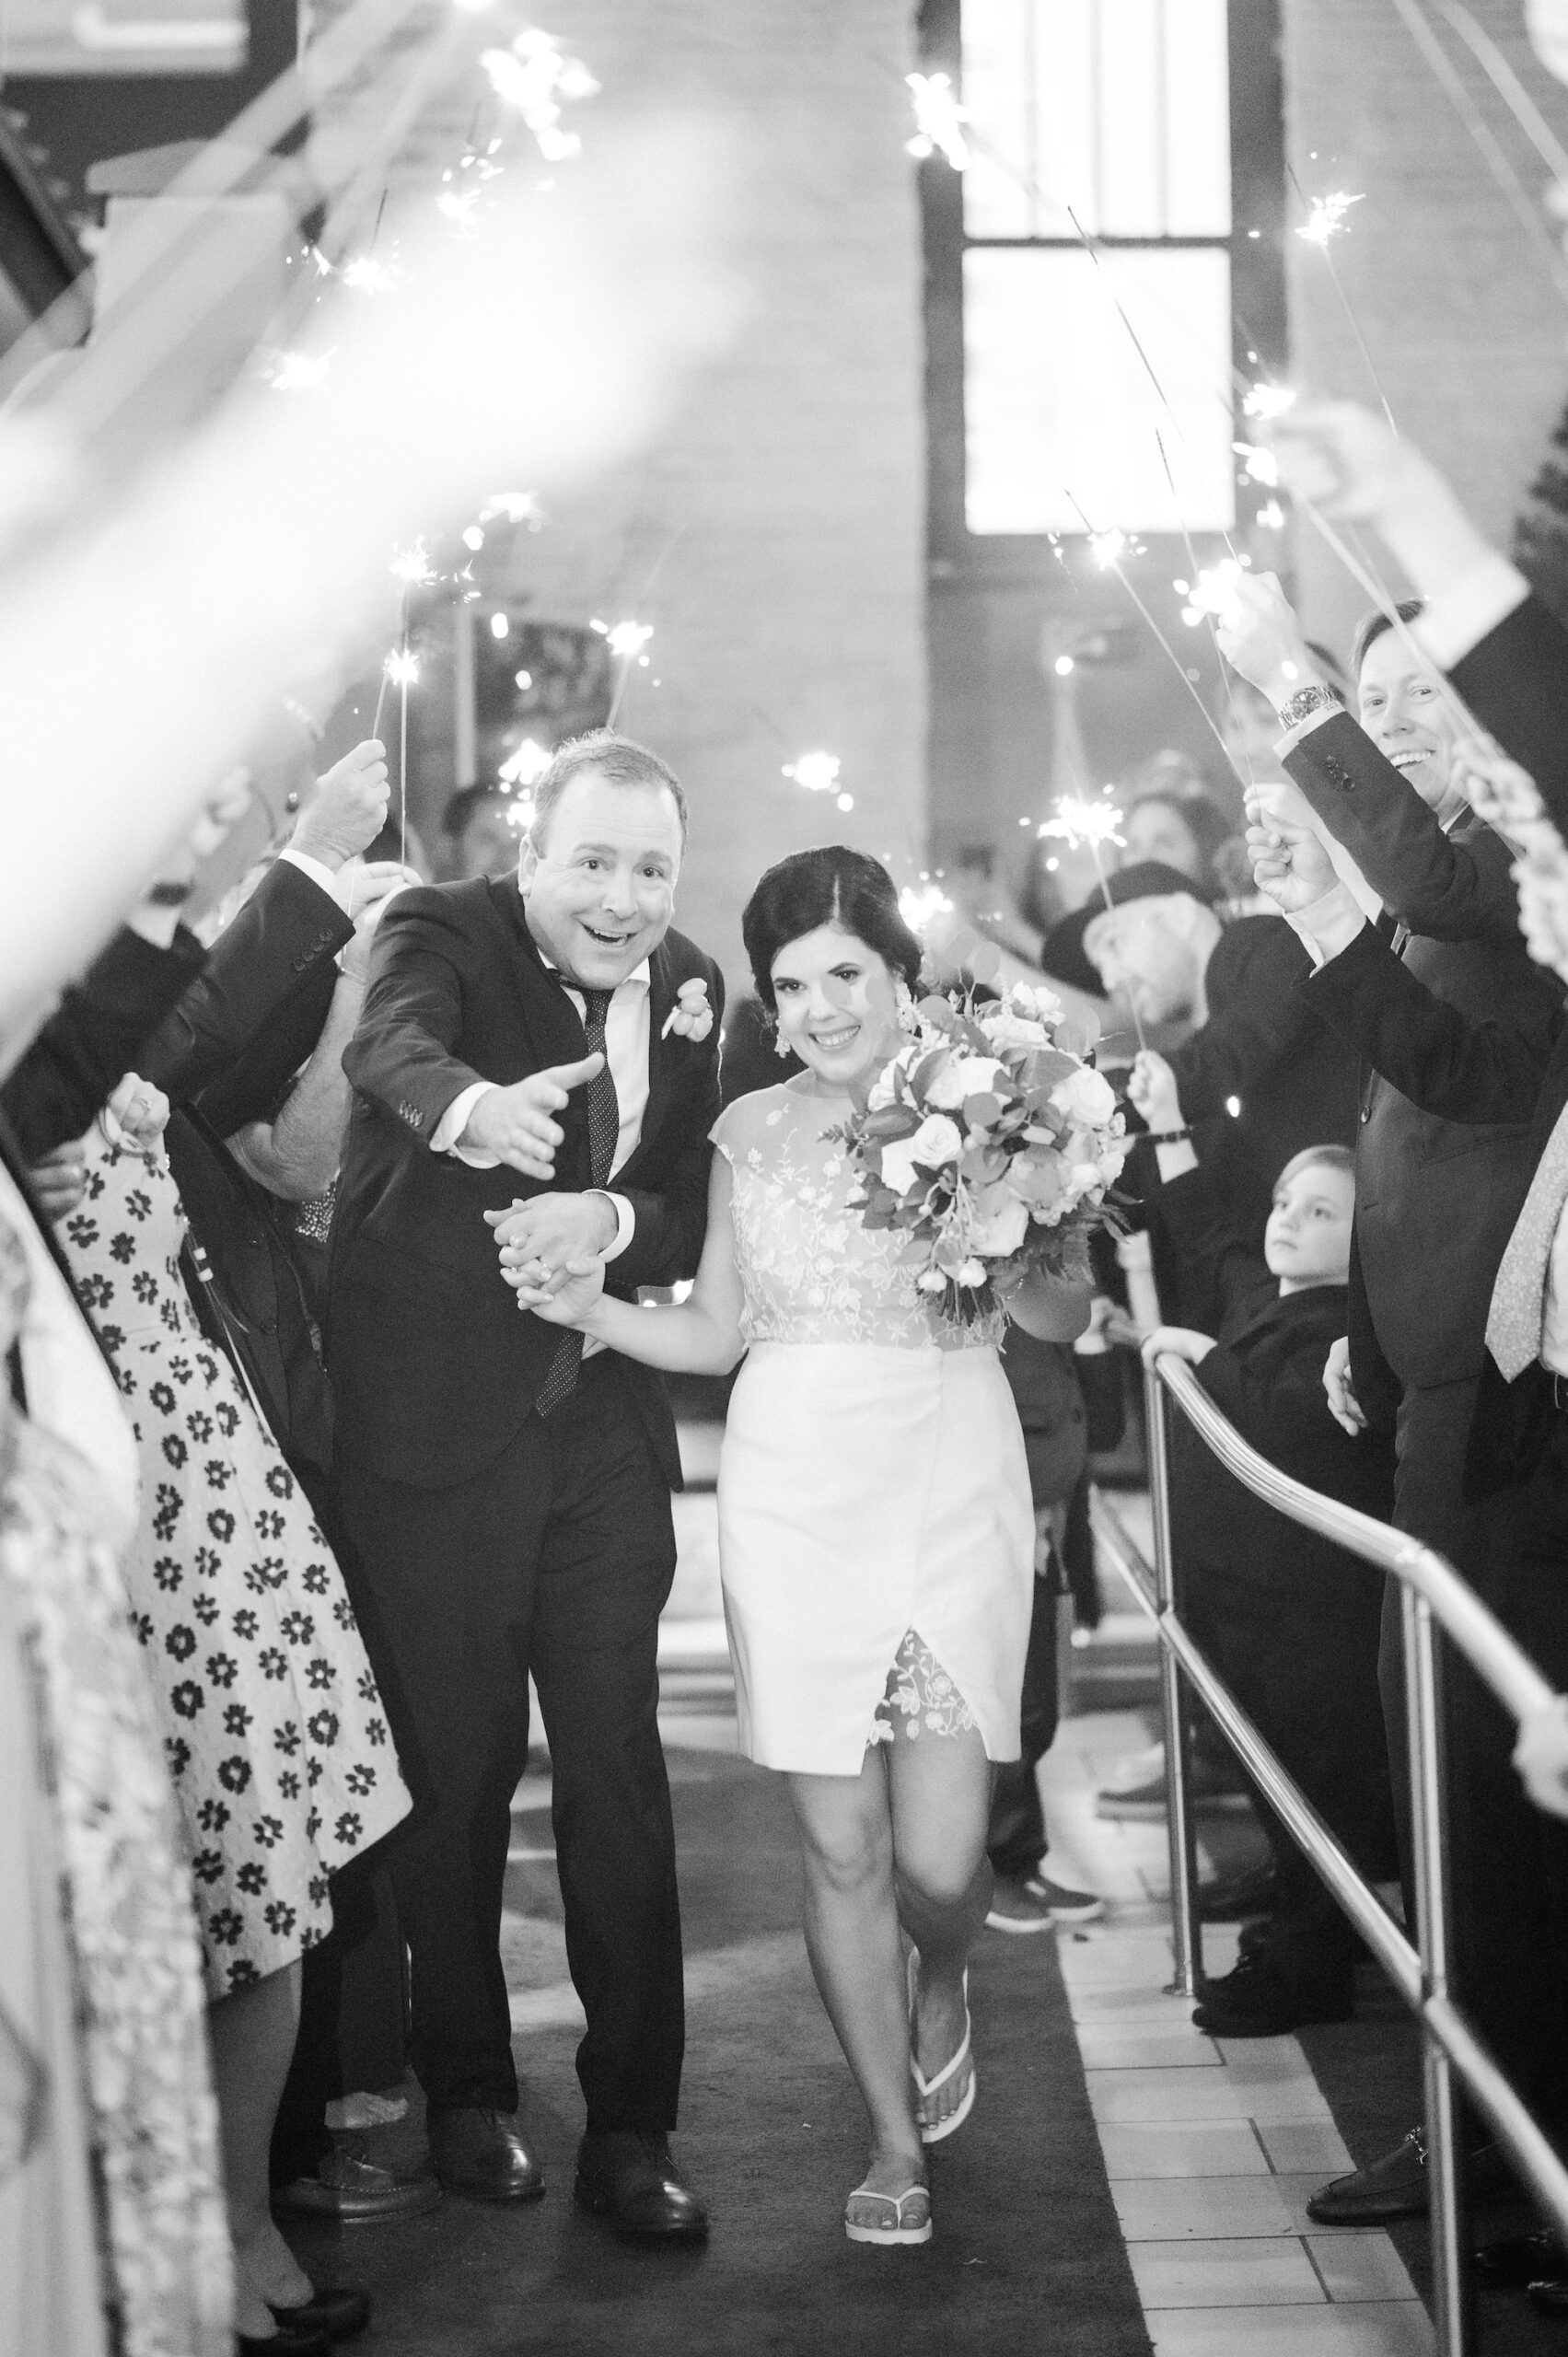 Bride and Groom Sparkler Wedding Exit in Black and White | Tampa Bay Wedding Photographer Amanda Zabrocki Photography